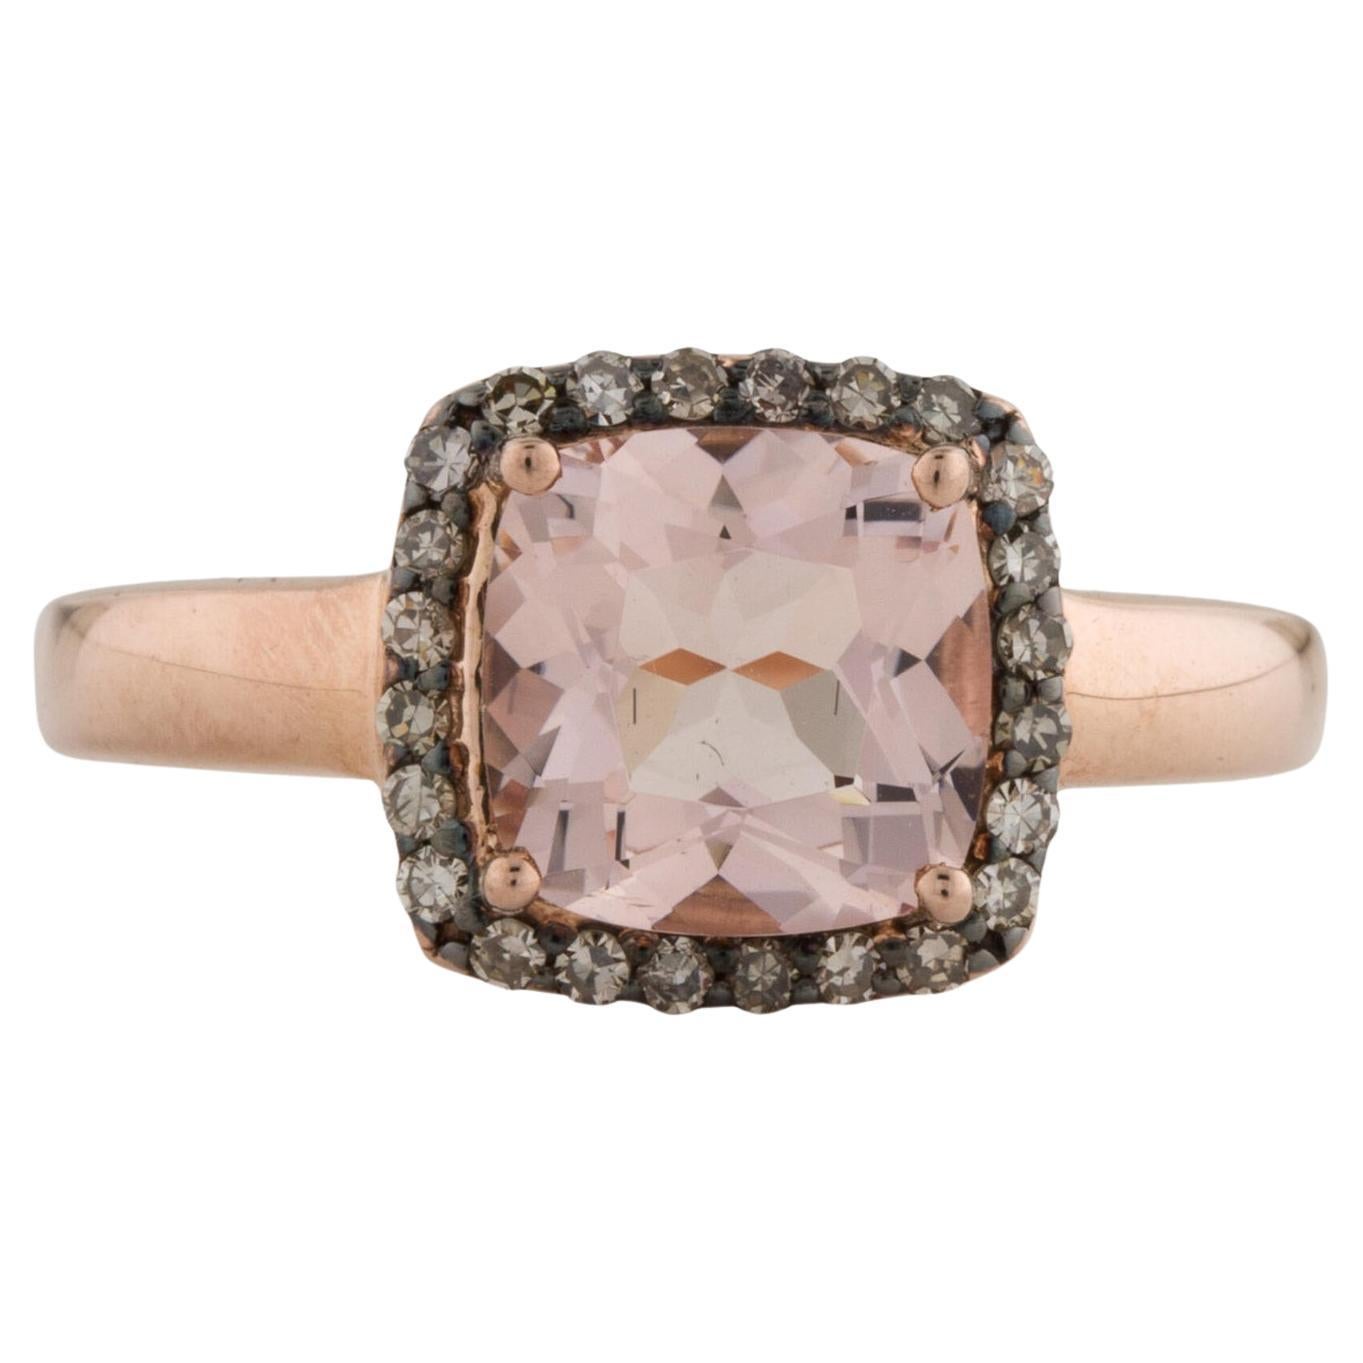 Exquisite 14K Diamond & Morganite Cocktail Ring - Size 7.5 - Elegant Jewelry